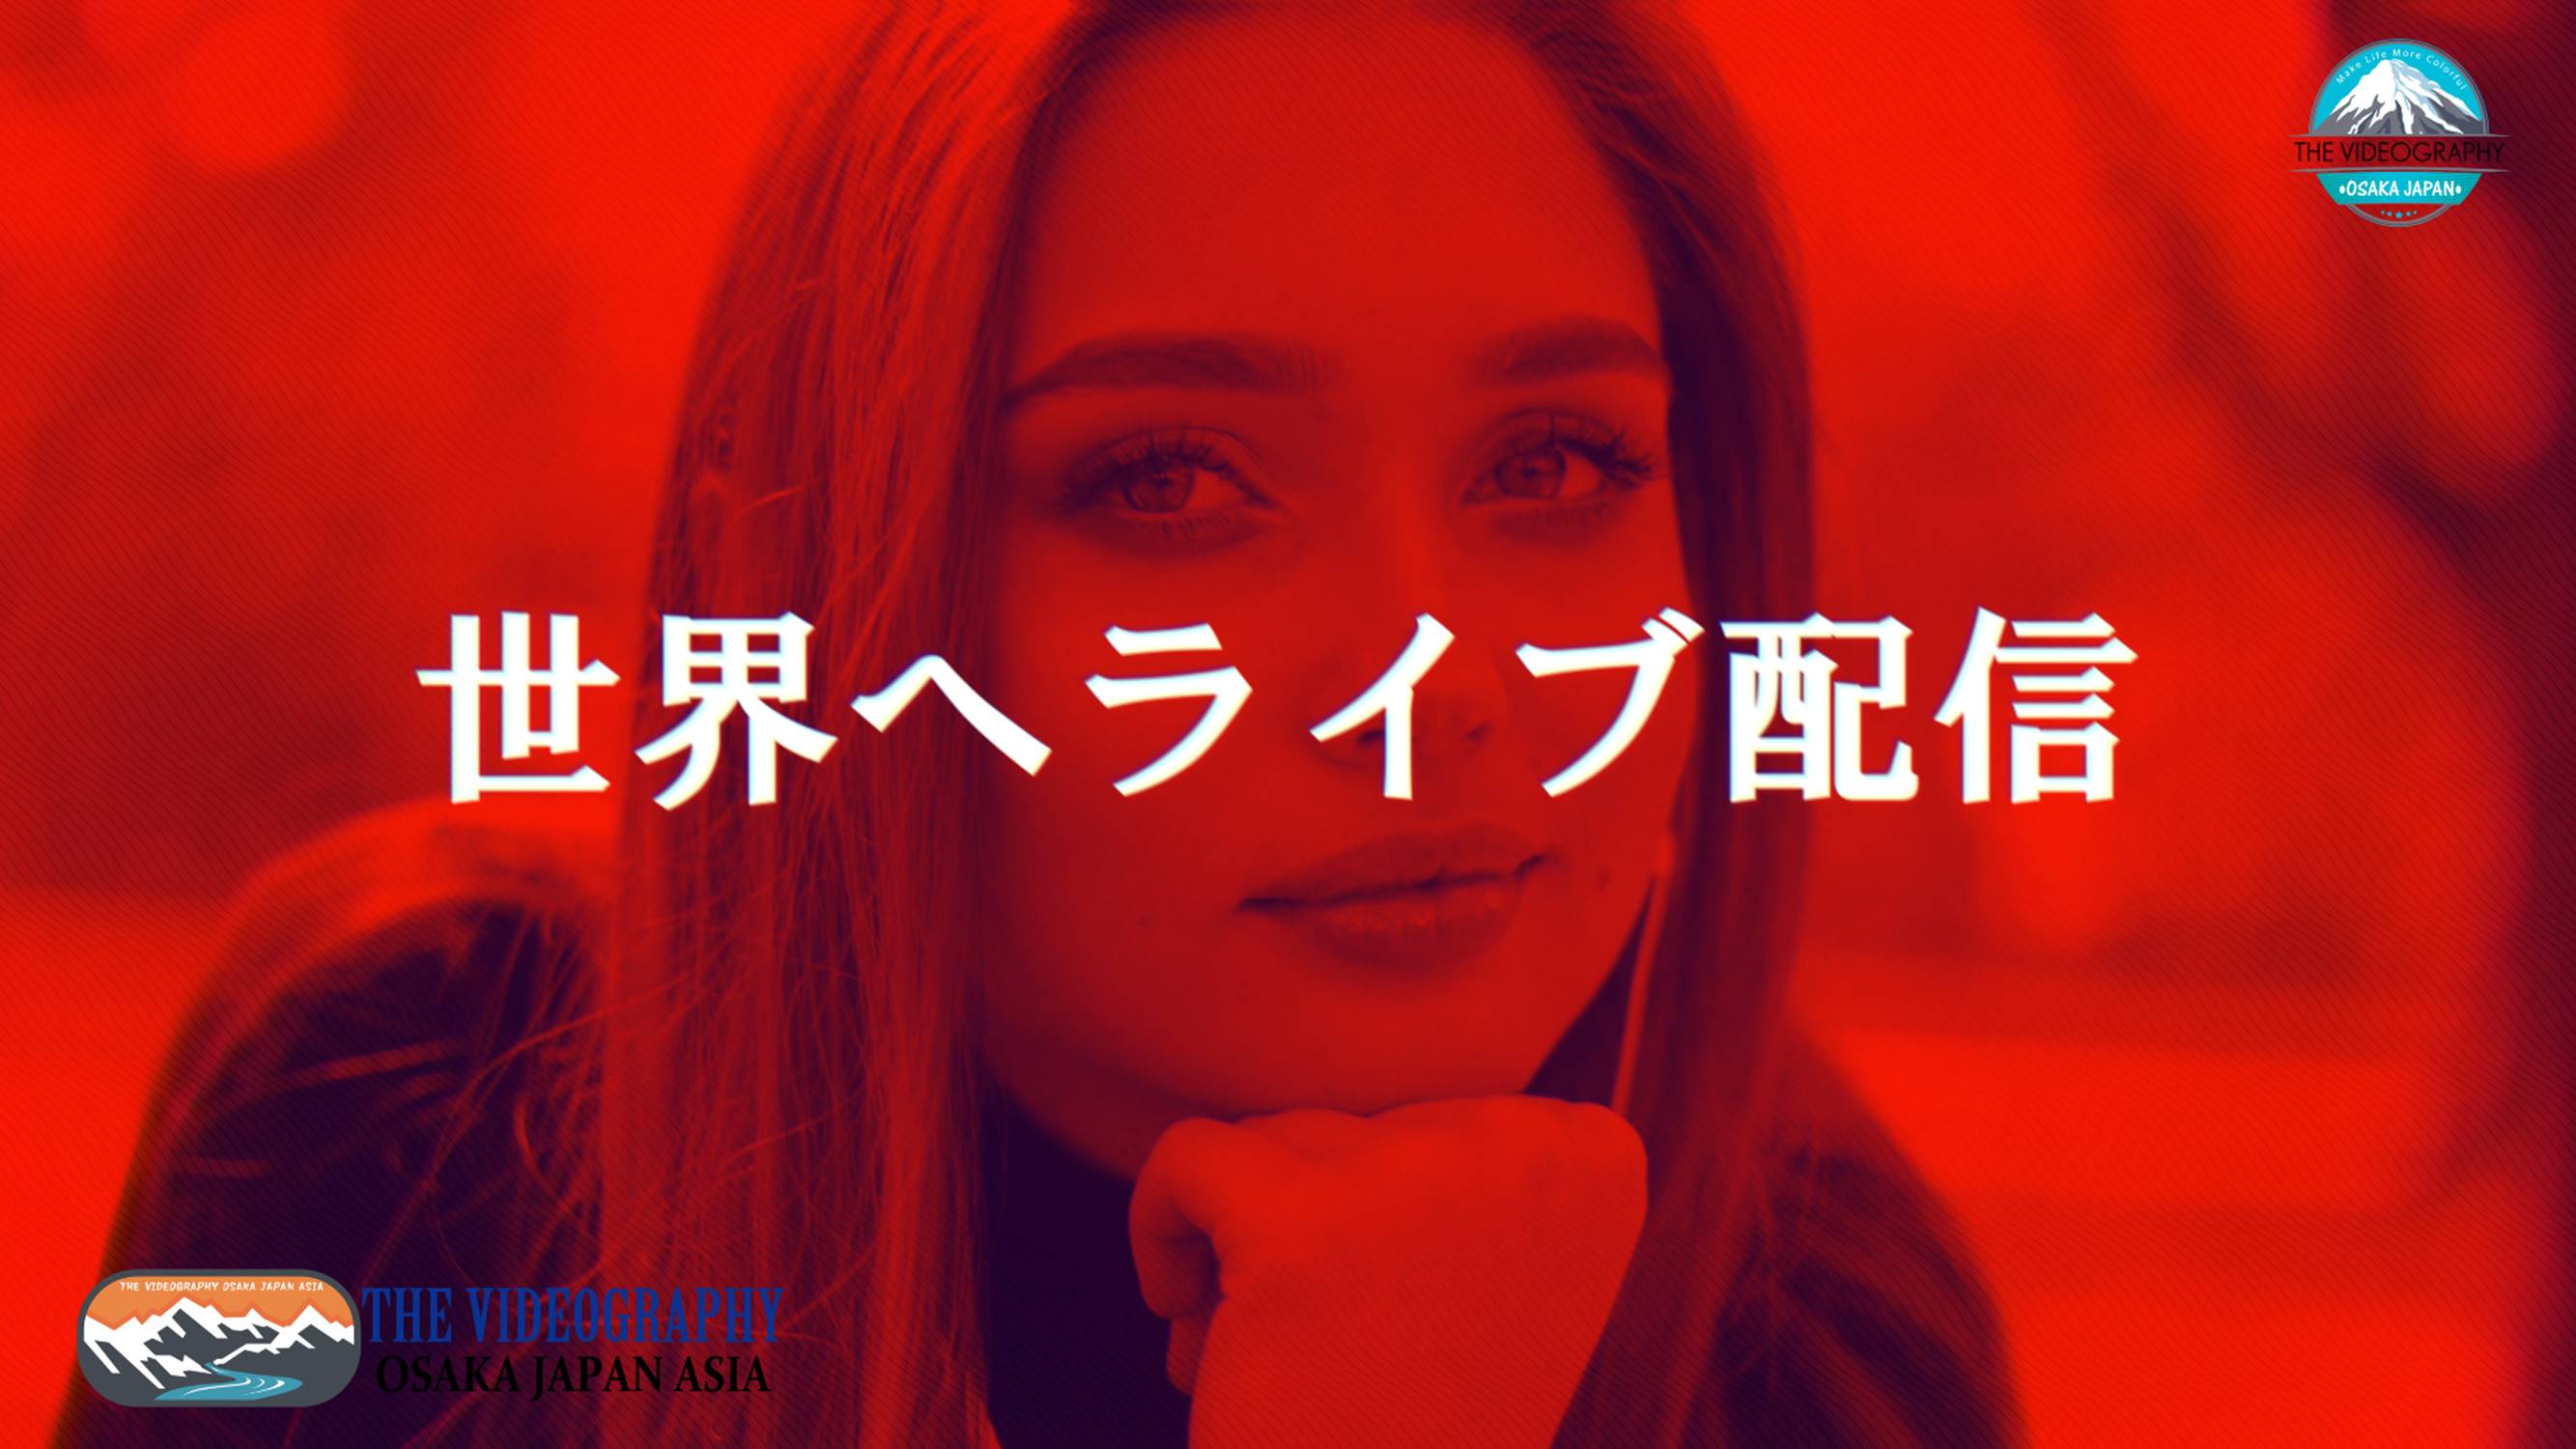 VG Live Platform:ビデオグラフィ・プラットフォーム : サブスクリプション 月額課金可能な稼げるライブストリーミングサイト 会員限定の動画オンランサロンを再発明。視聴者 ファン 受講生から視聴料金を頂戴し再度 良質な動画制作へとつなげるサイクルを生み出すホームページ作成サービス。Today, THE VIDEOGRAPHY OSAKA JAPAN ASIA is going to reinvent the Video Platform and the live streaming subscription website.